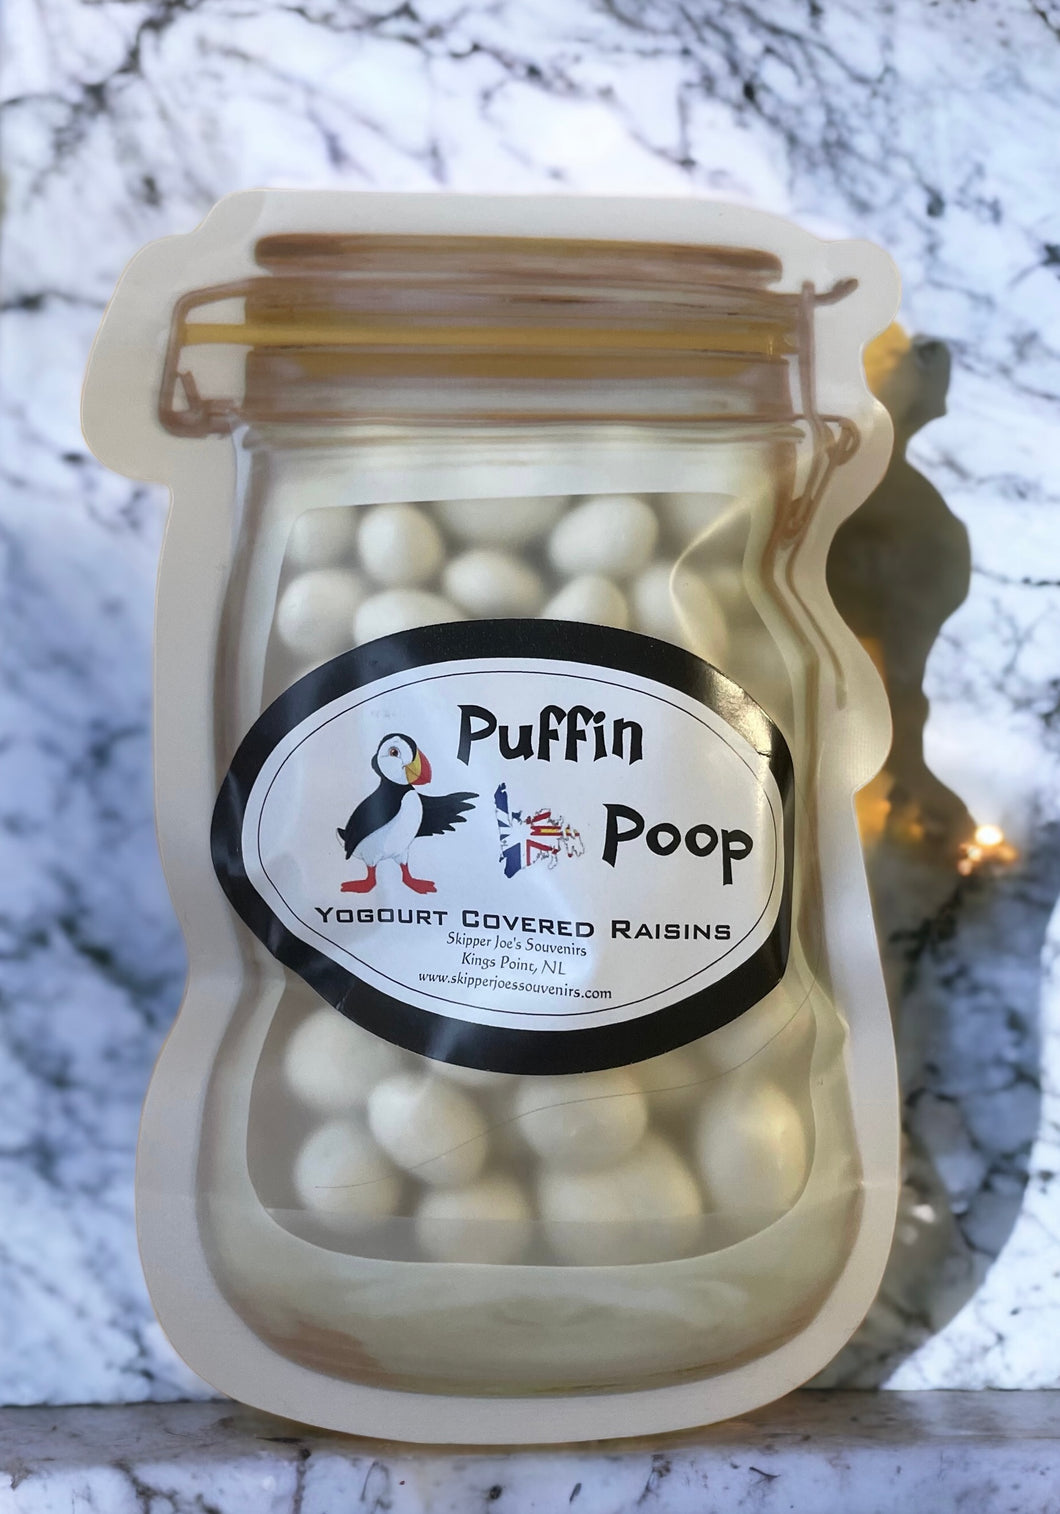 Puffin Poop - Yogourt covered raisins